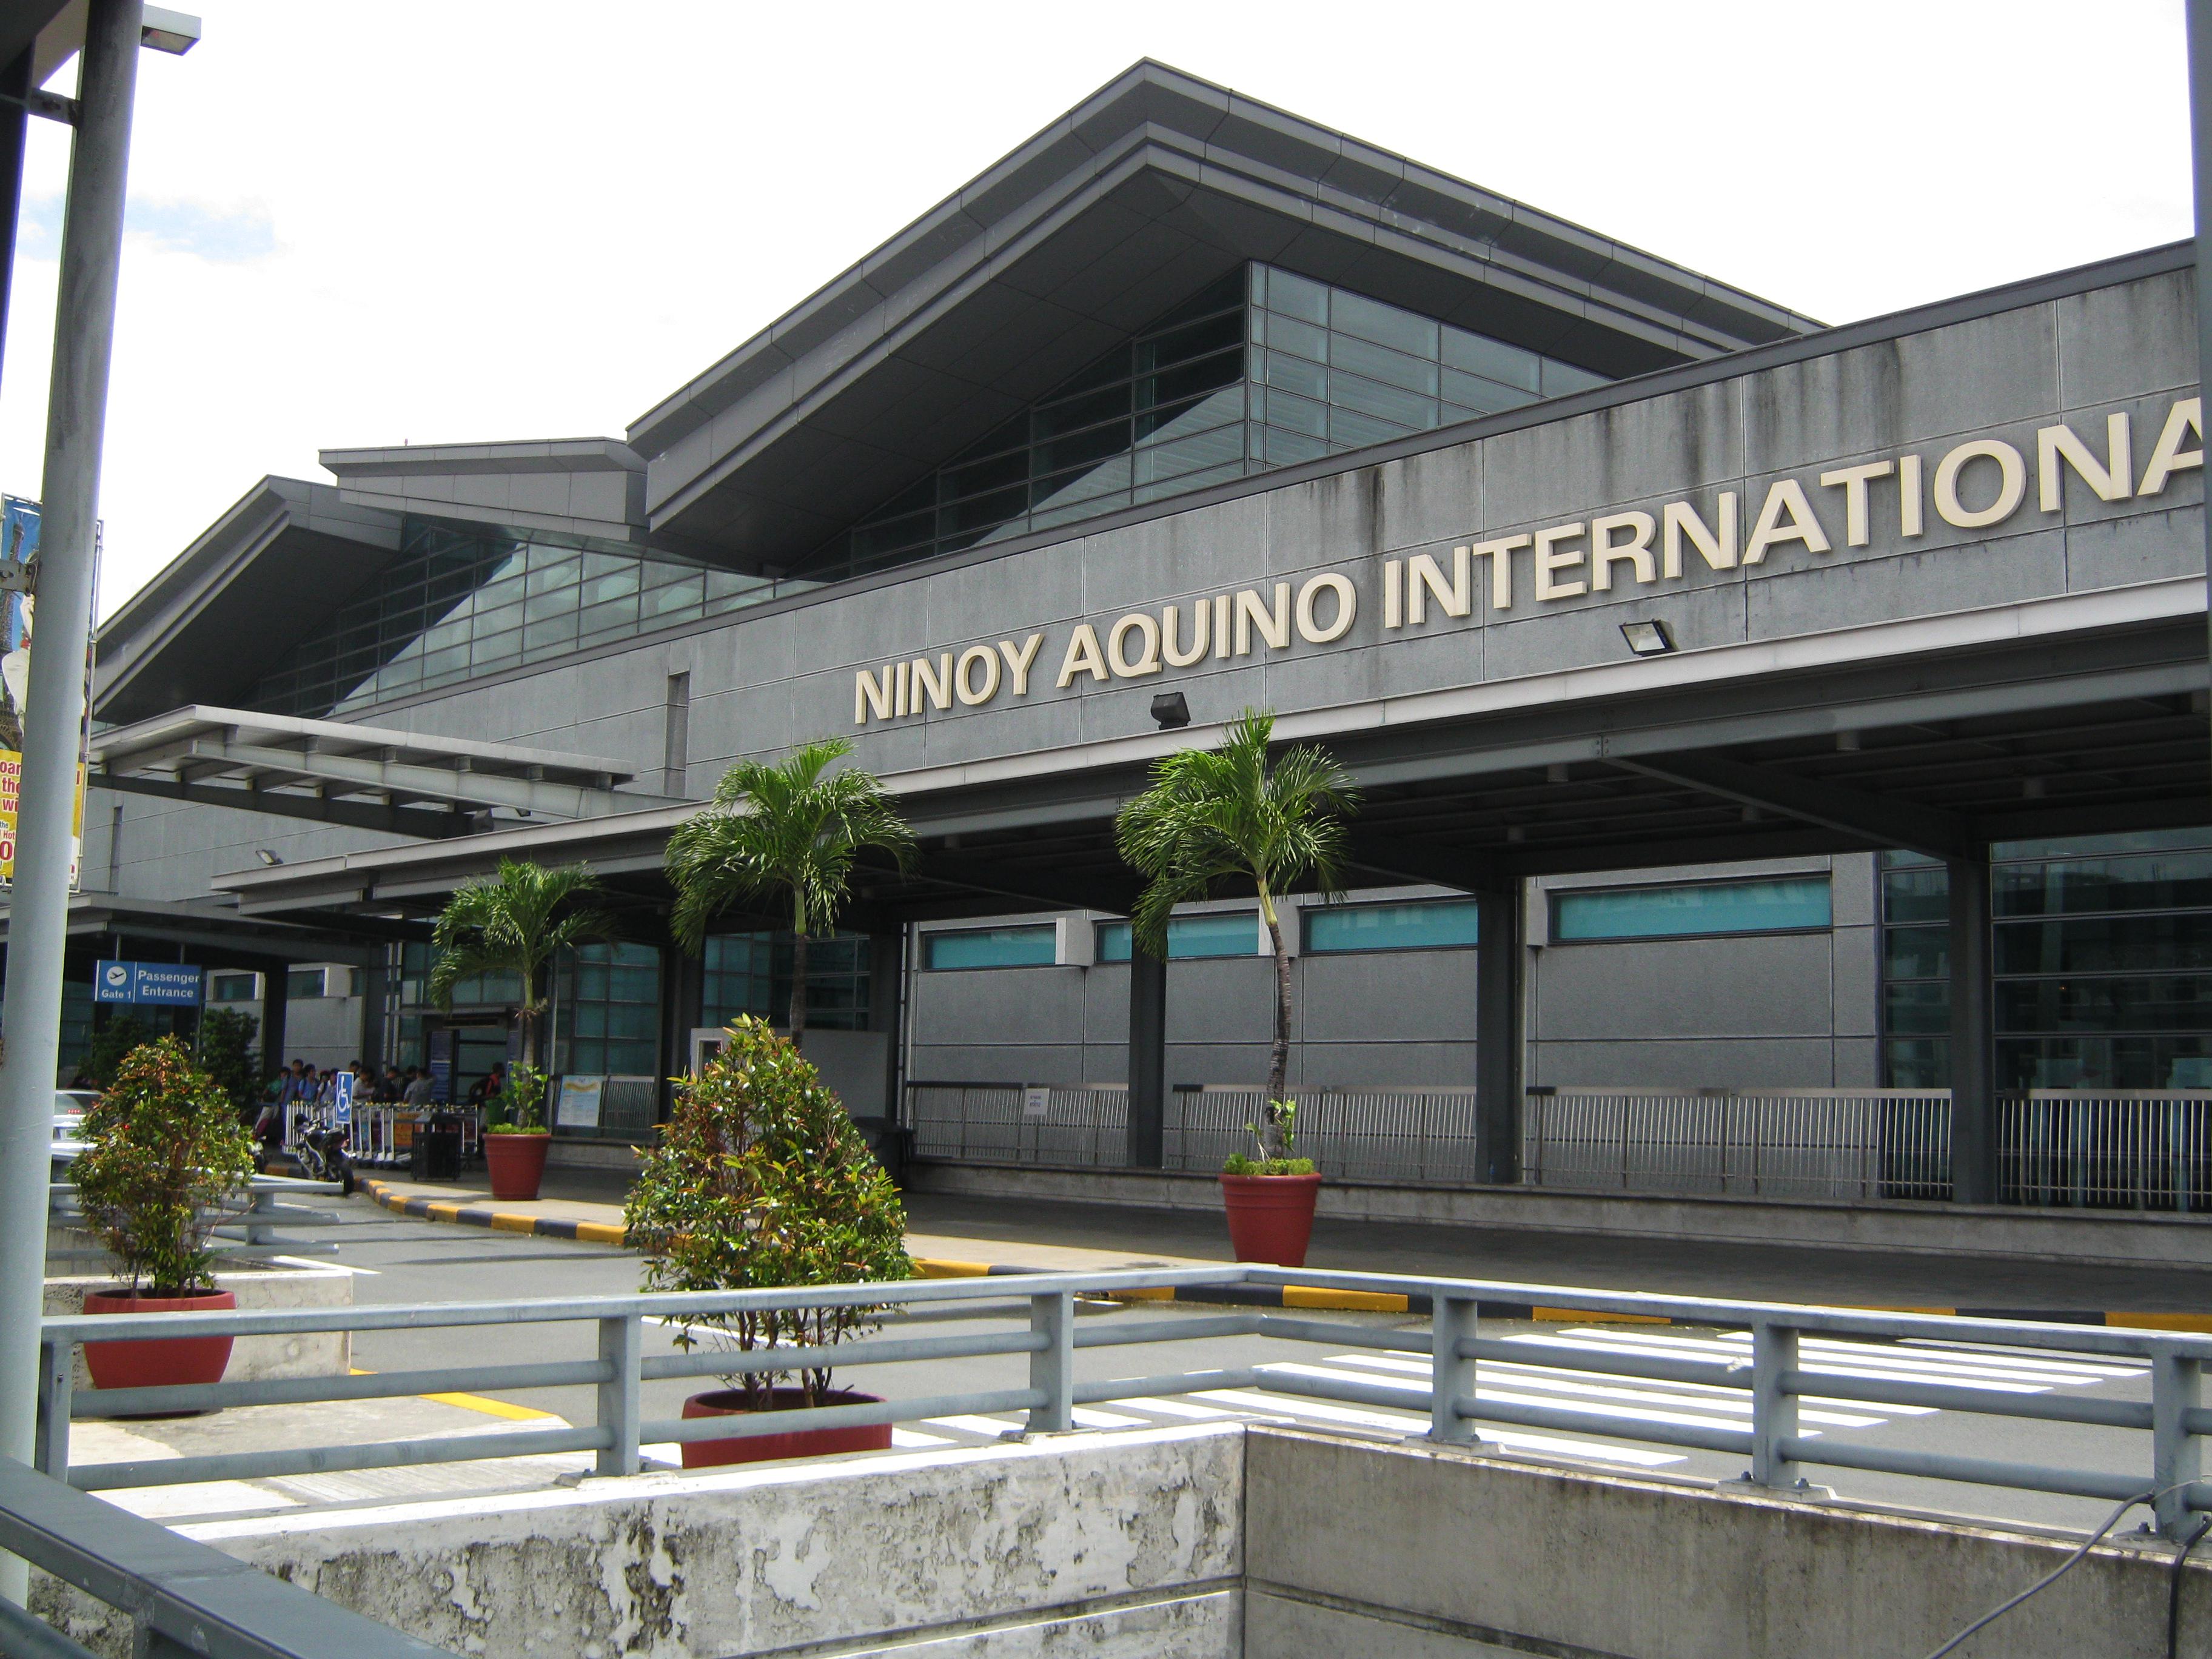 Naia Terminal 3 To Resume Intl Operations Starting July 8 —miaa │ Gma